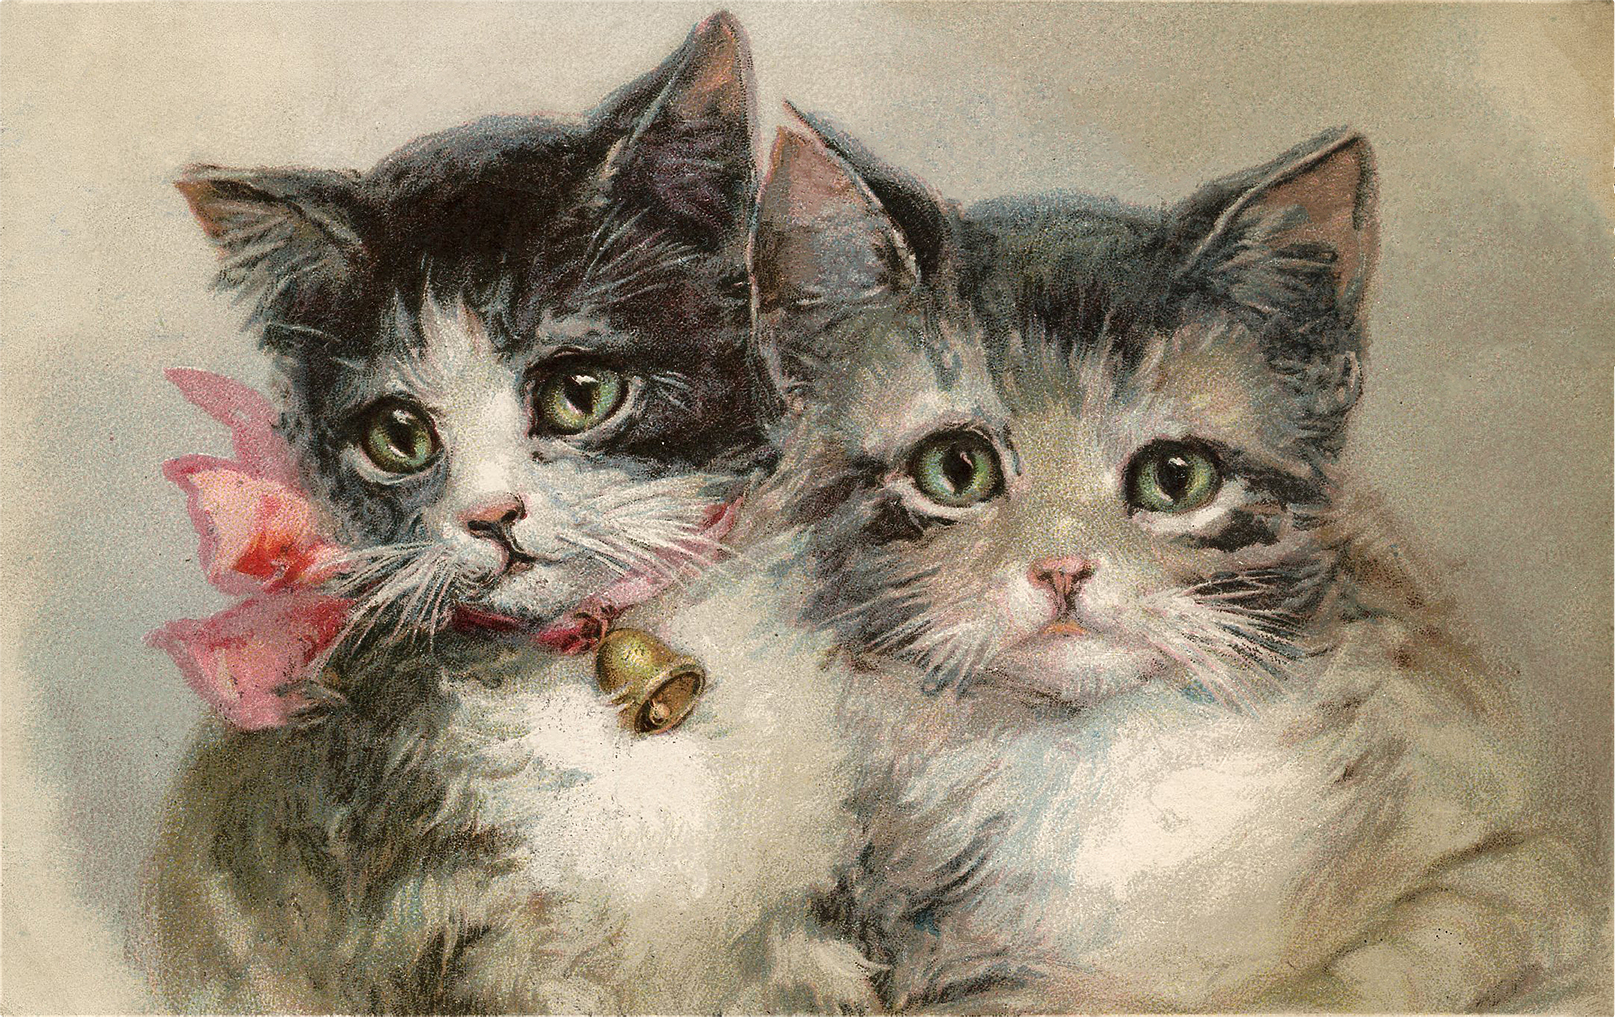 Vintage Kittens Image